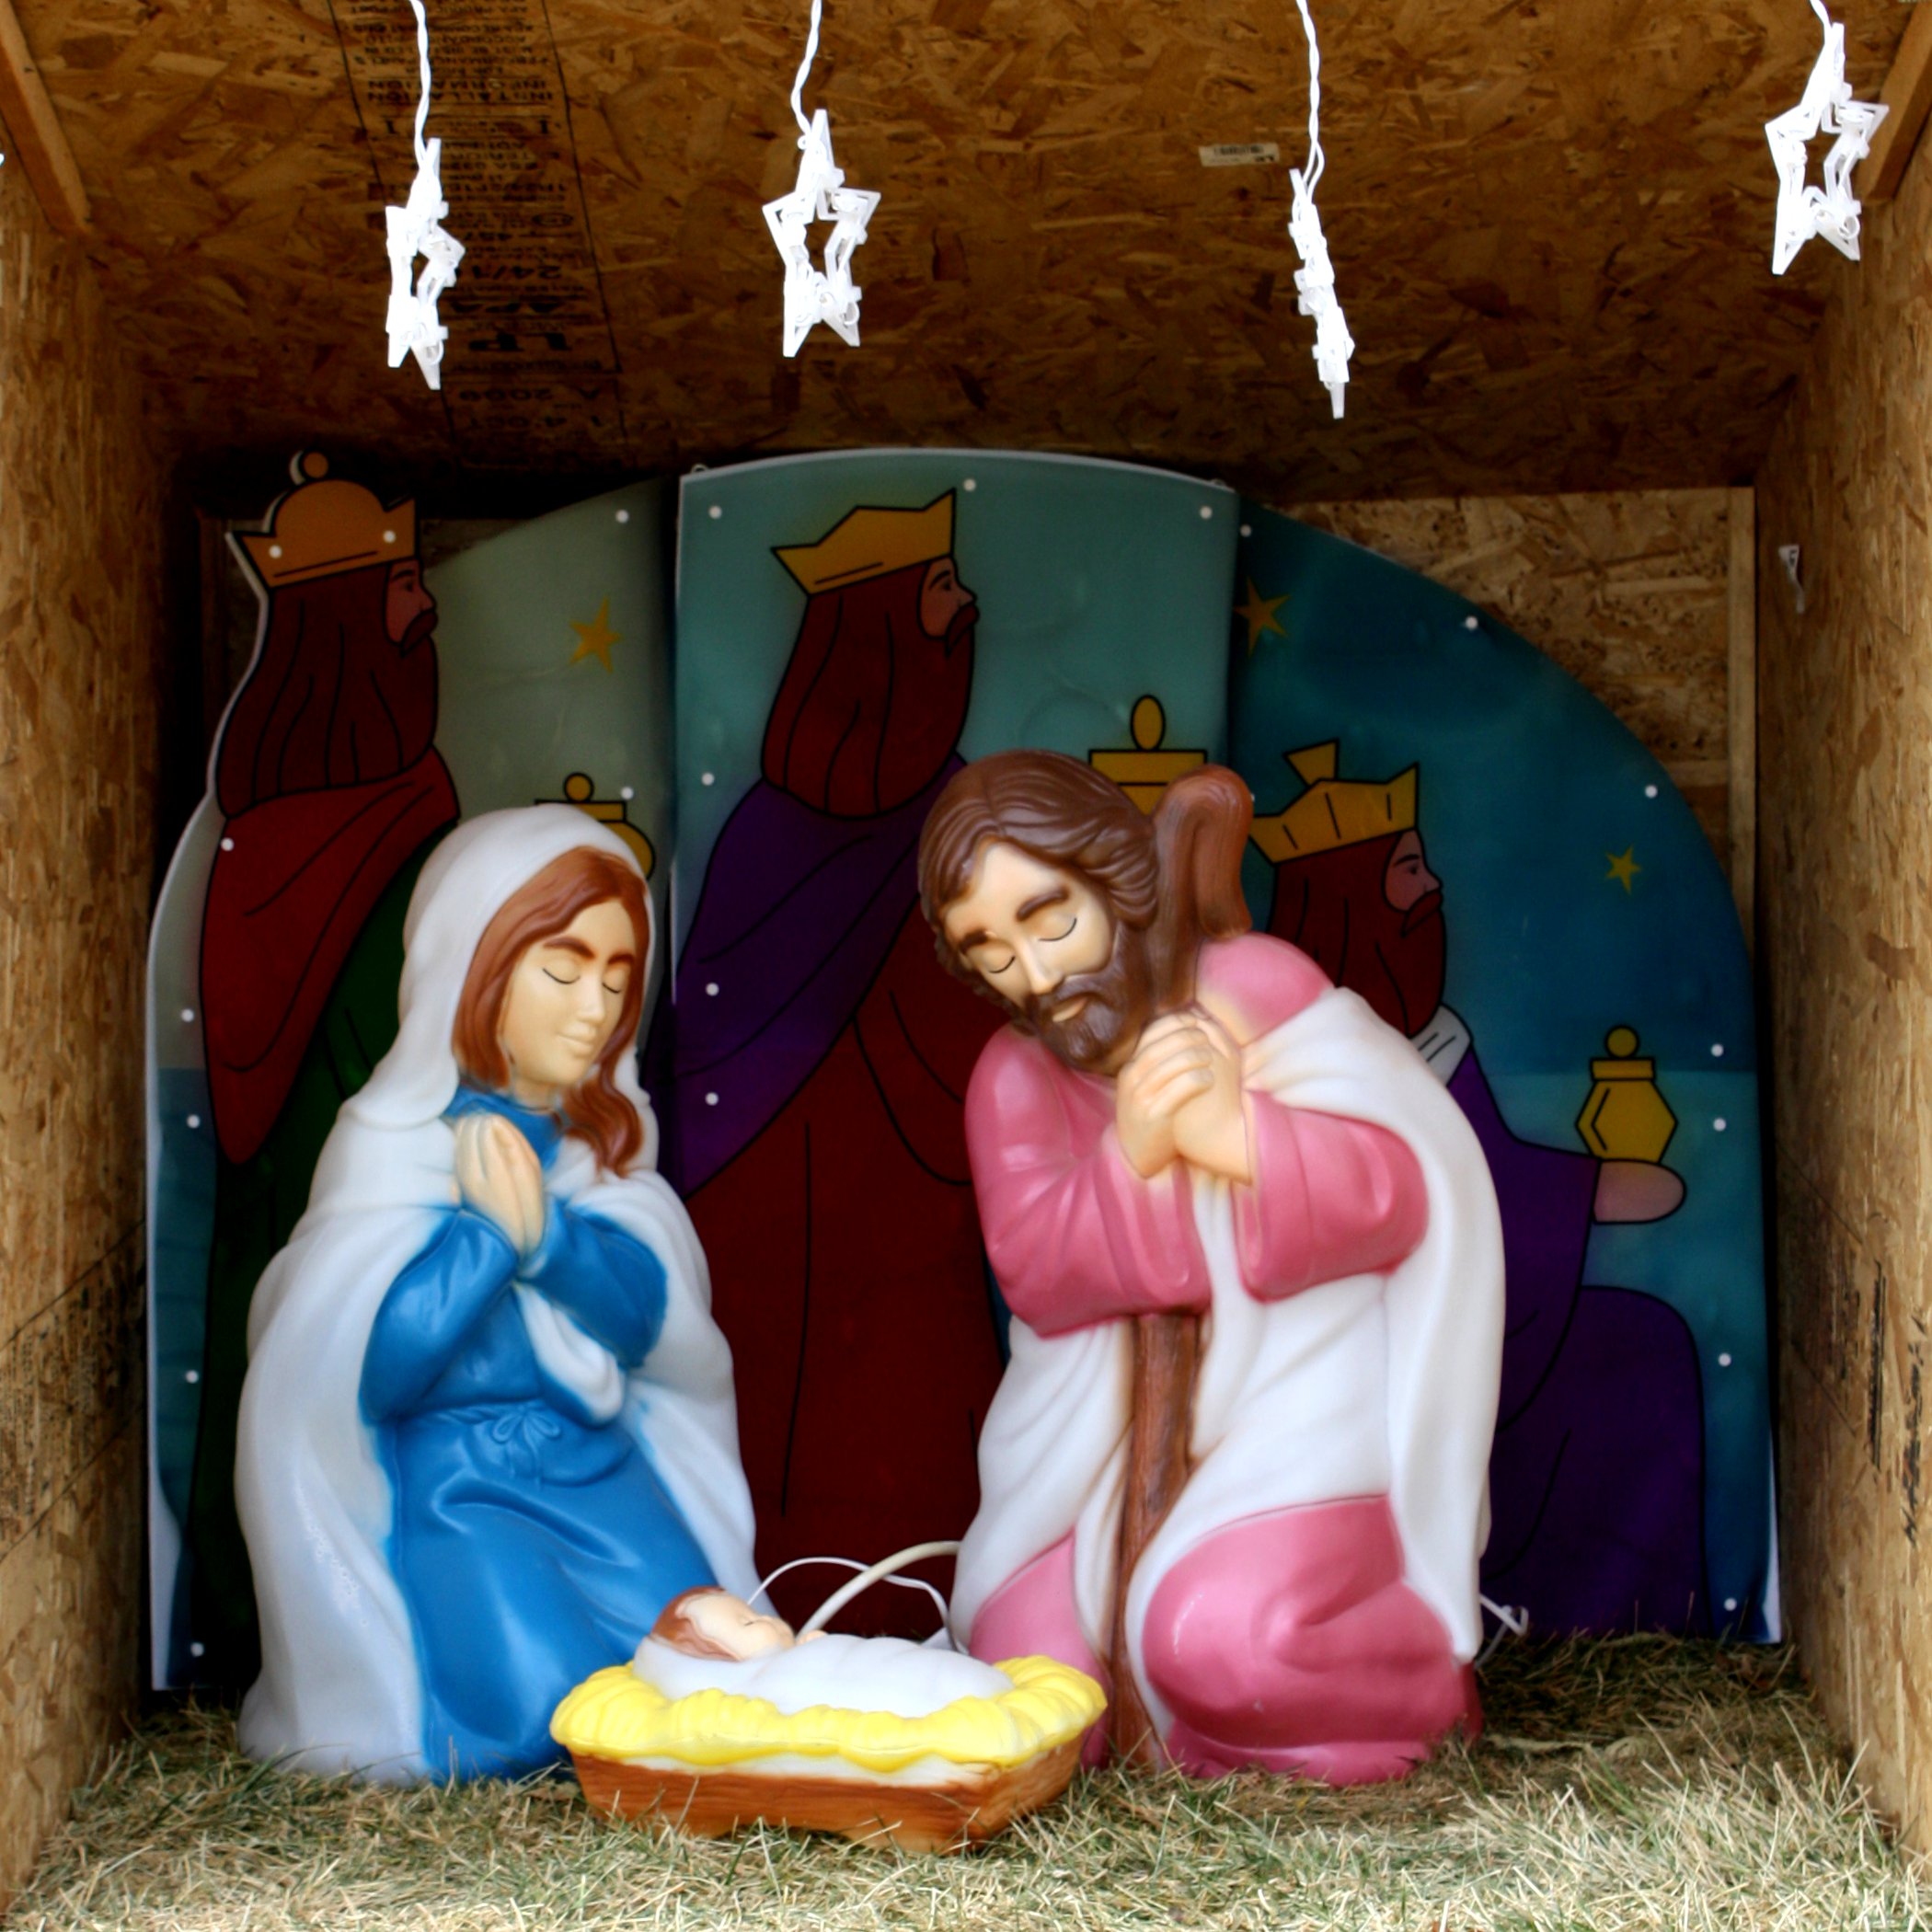 Nativity Scene Picture | Free Photograph | Photos Public Domain